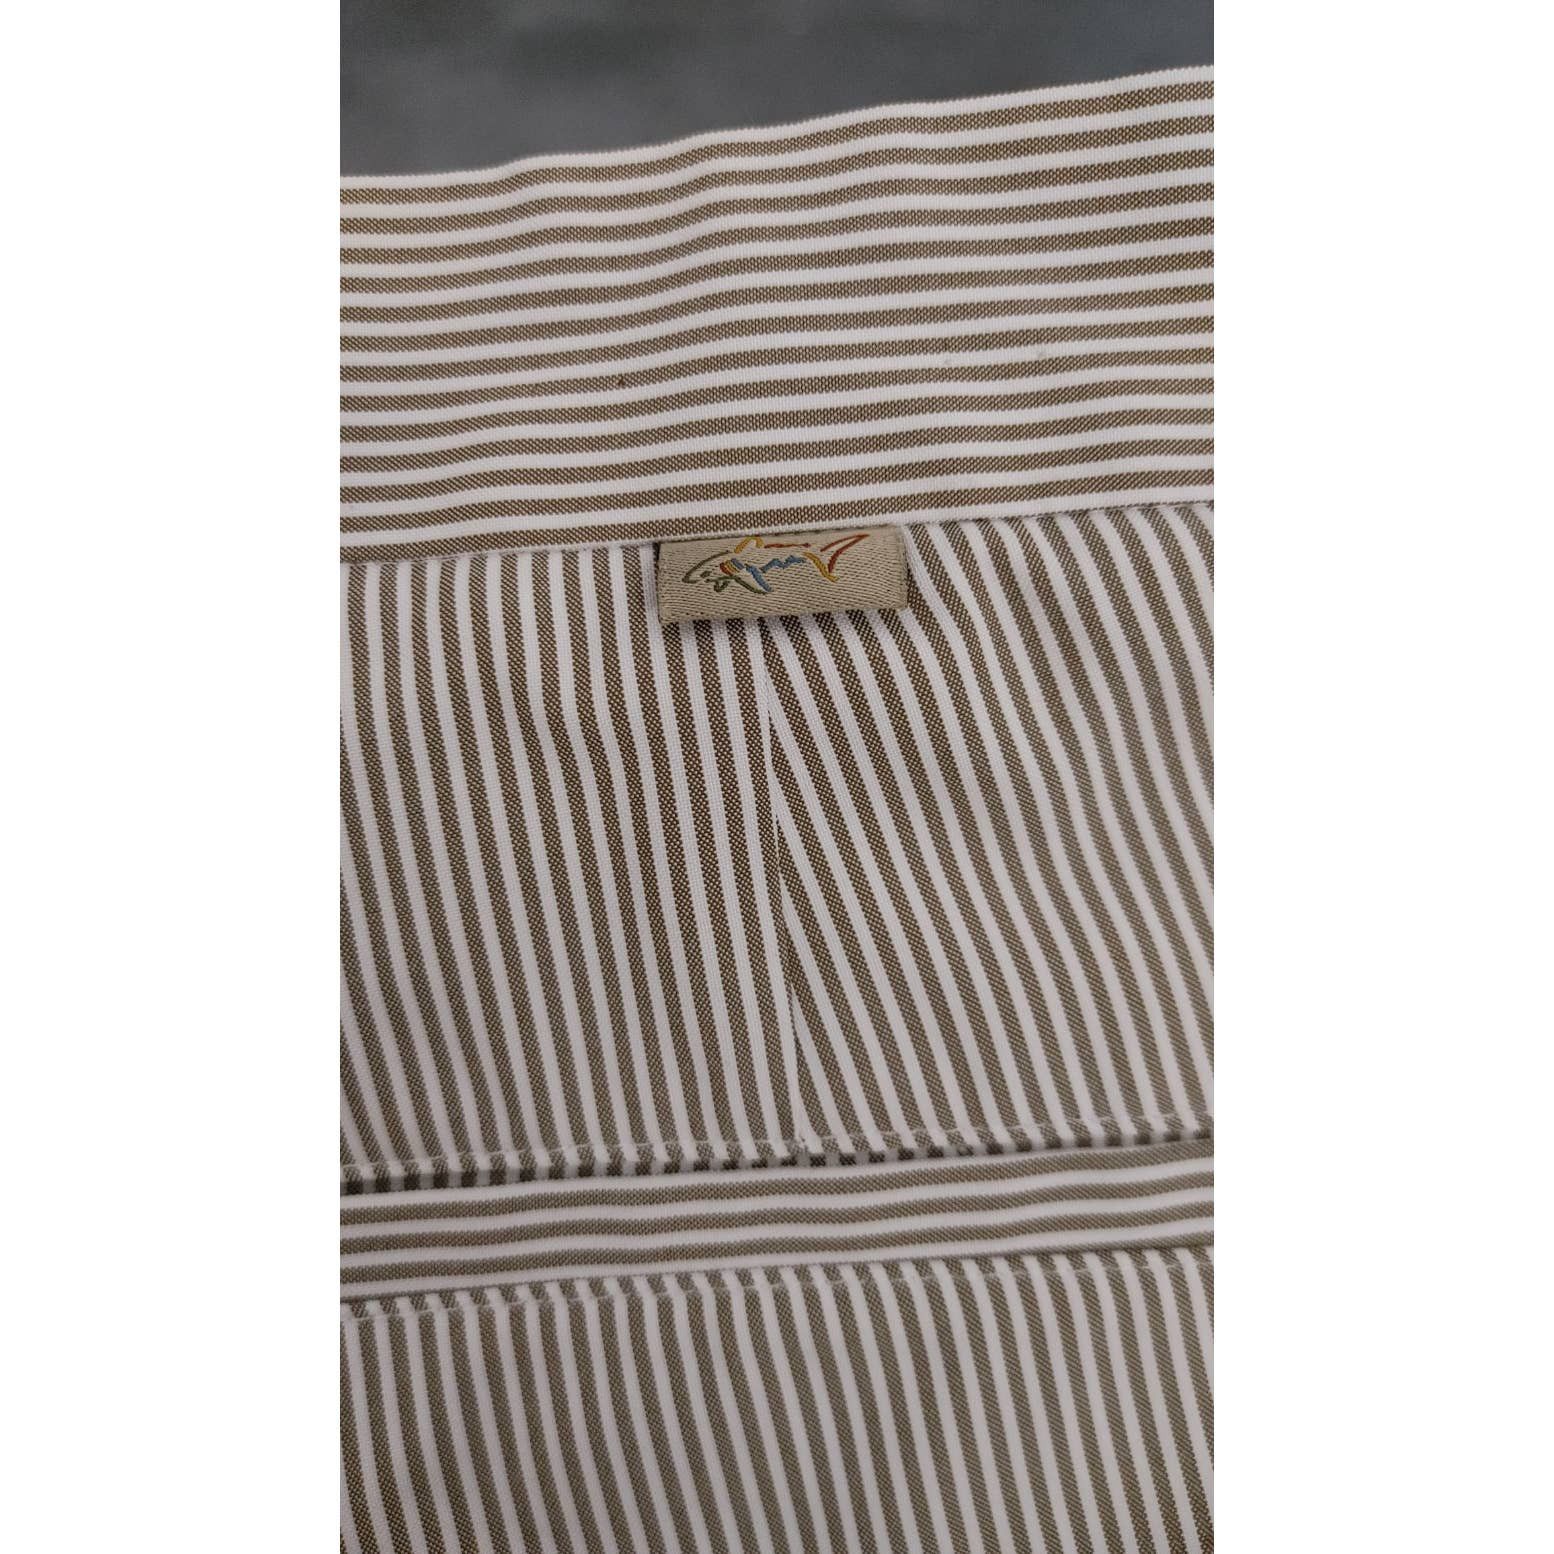 Greg Norman Greg Norman Shorts Striped Sz 34 Size US 34 / EU 50 - 4 Thumbnail